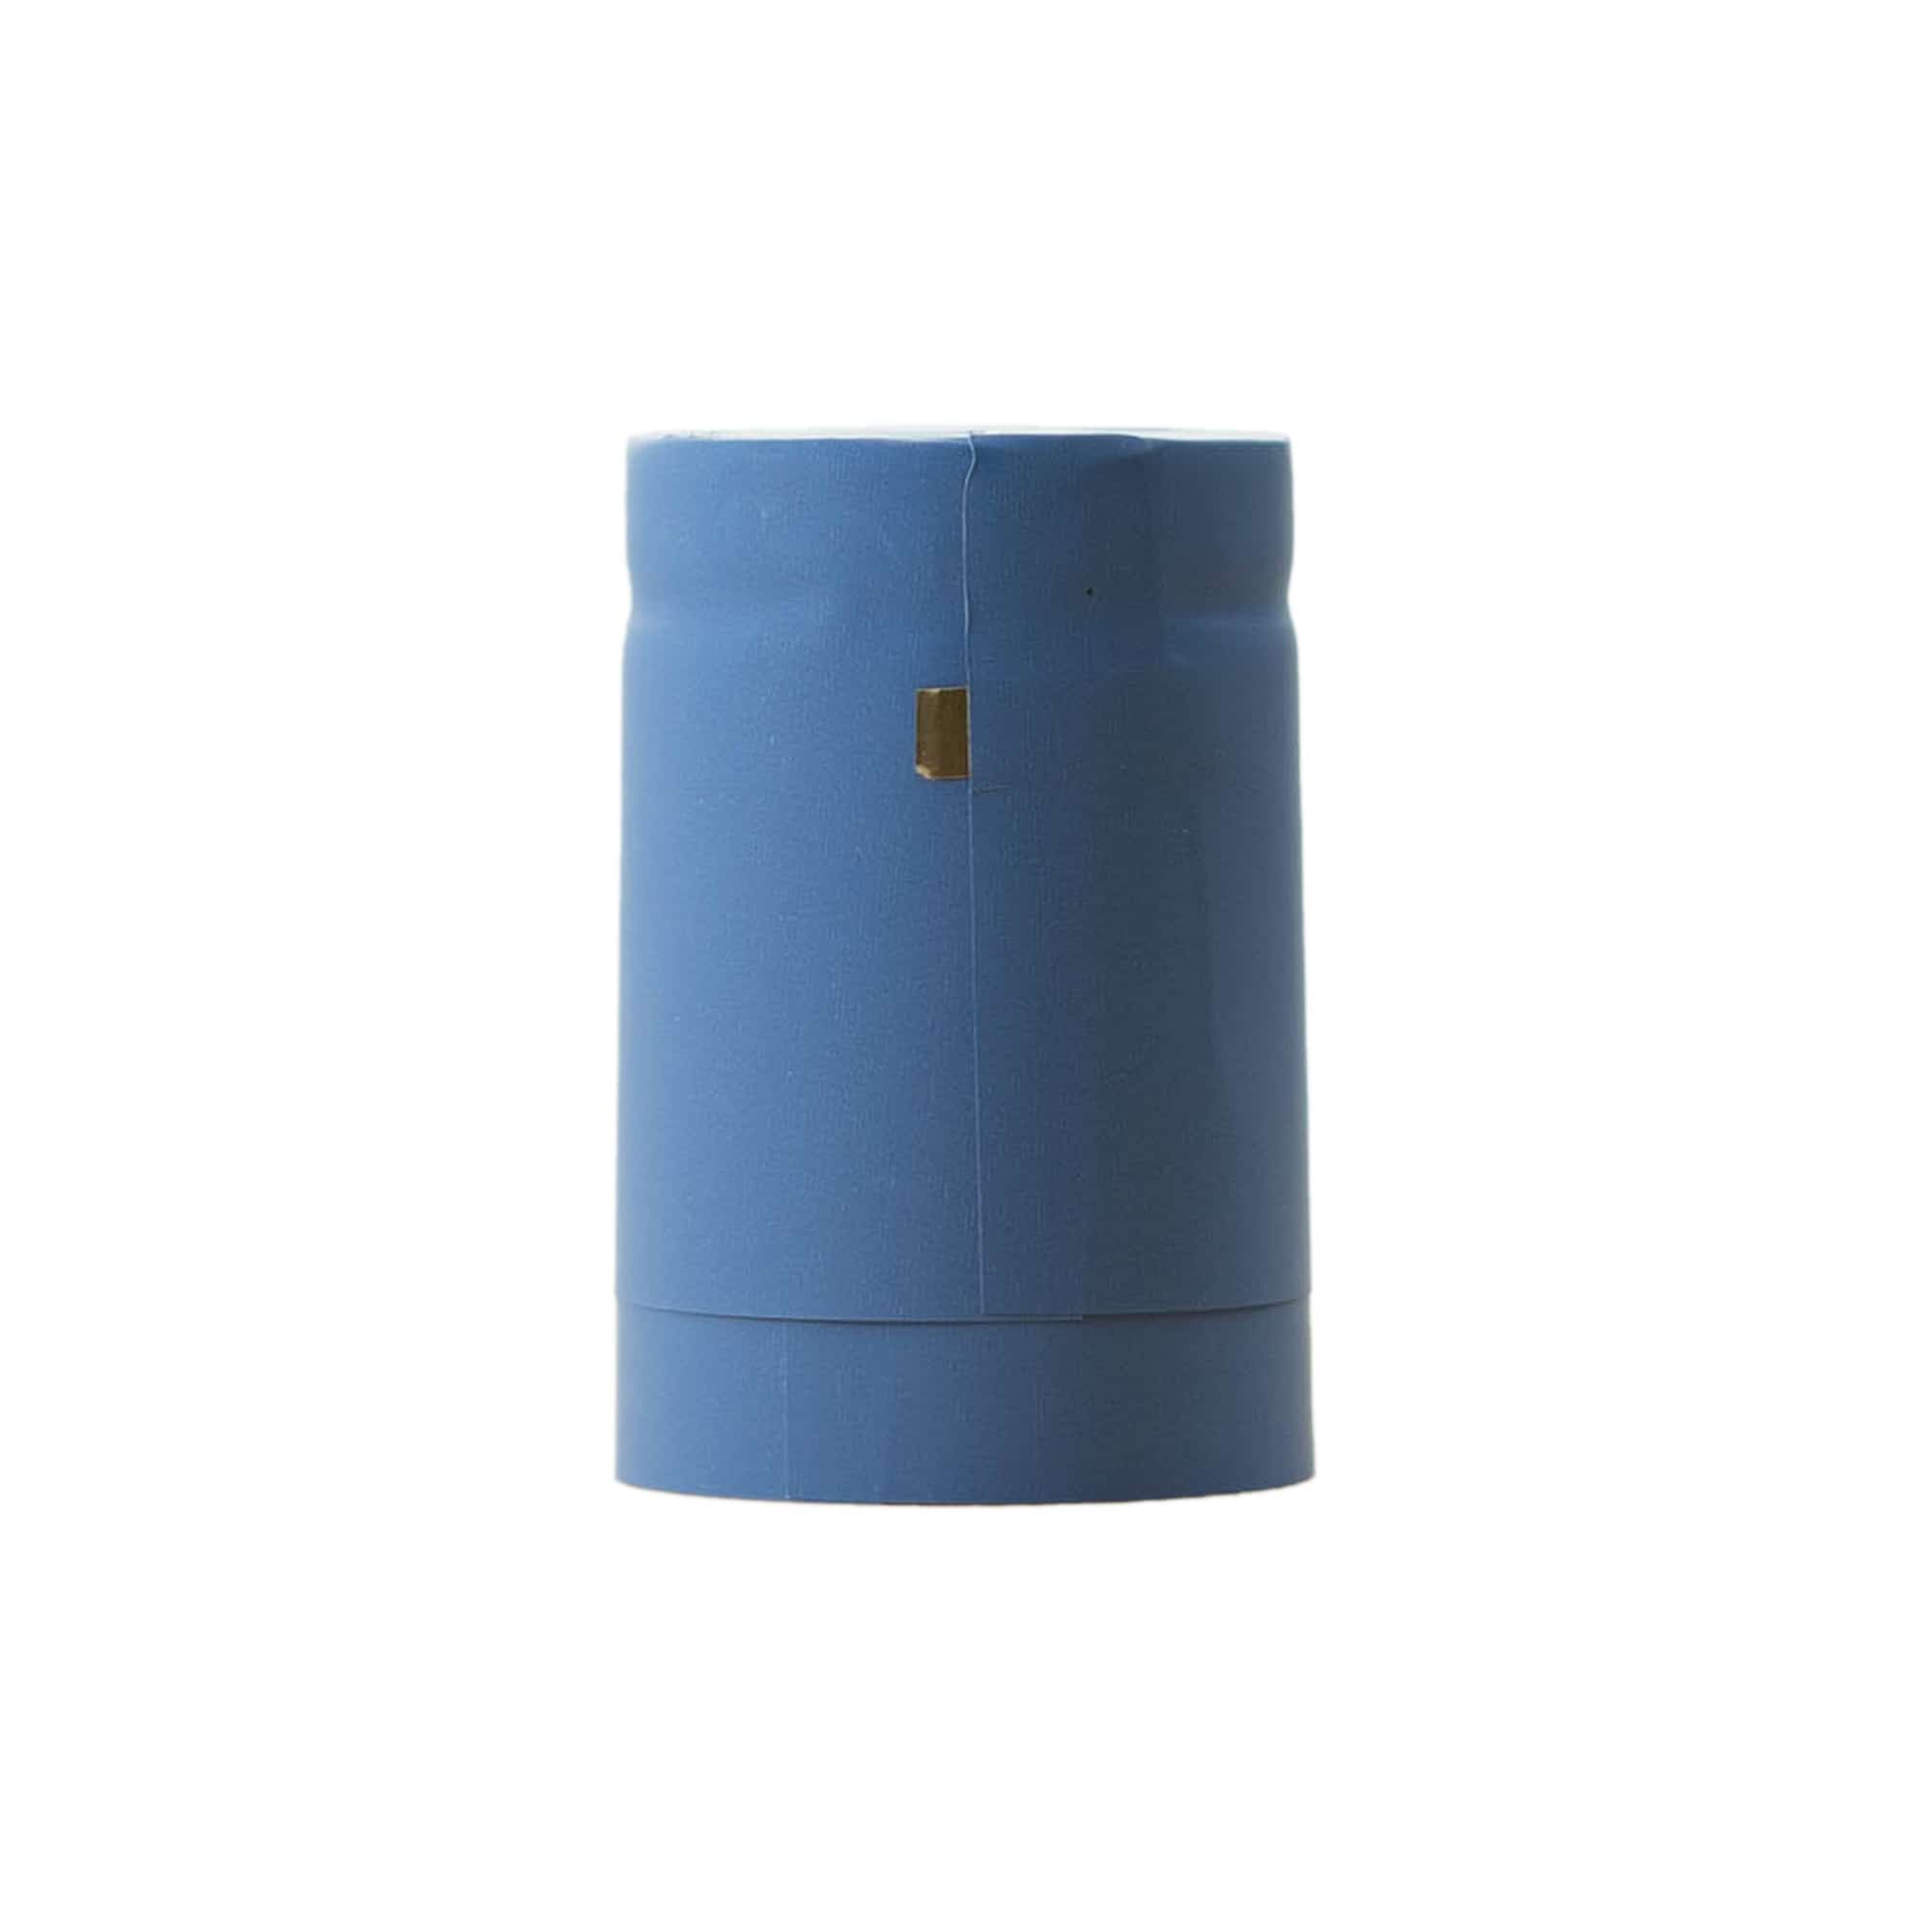 Schrumpfkapsel 32x41, PVC-Kunststoff, himmelblau